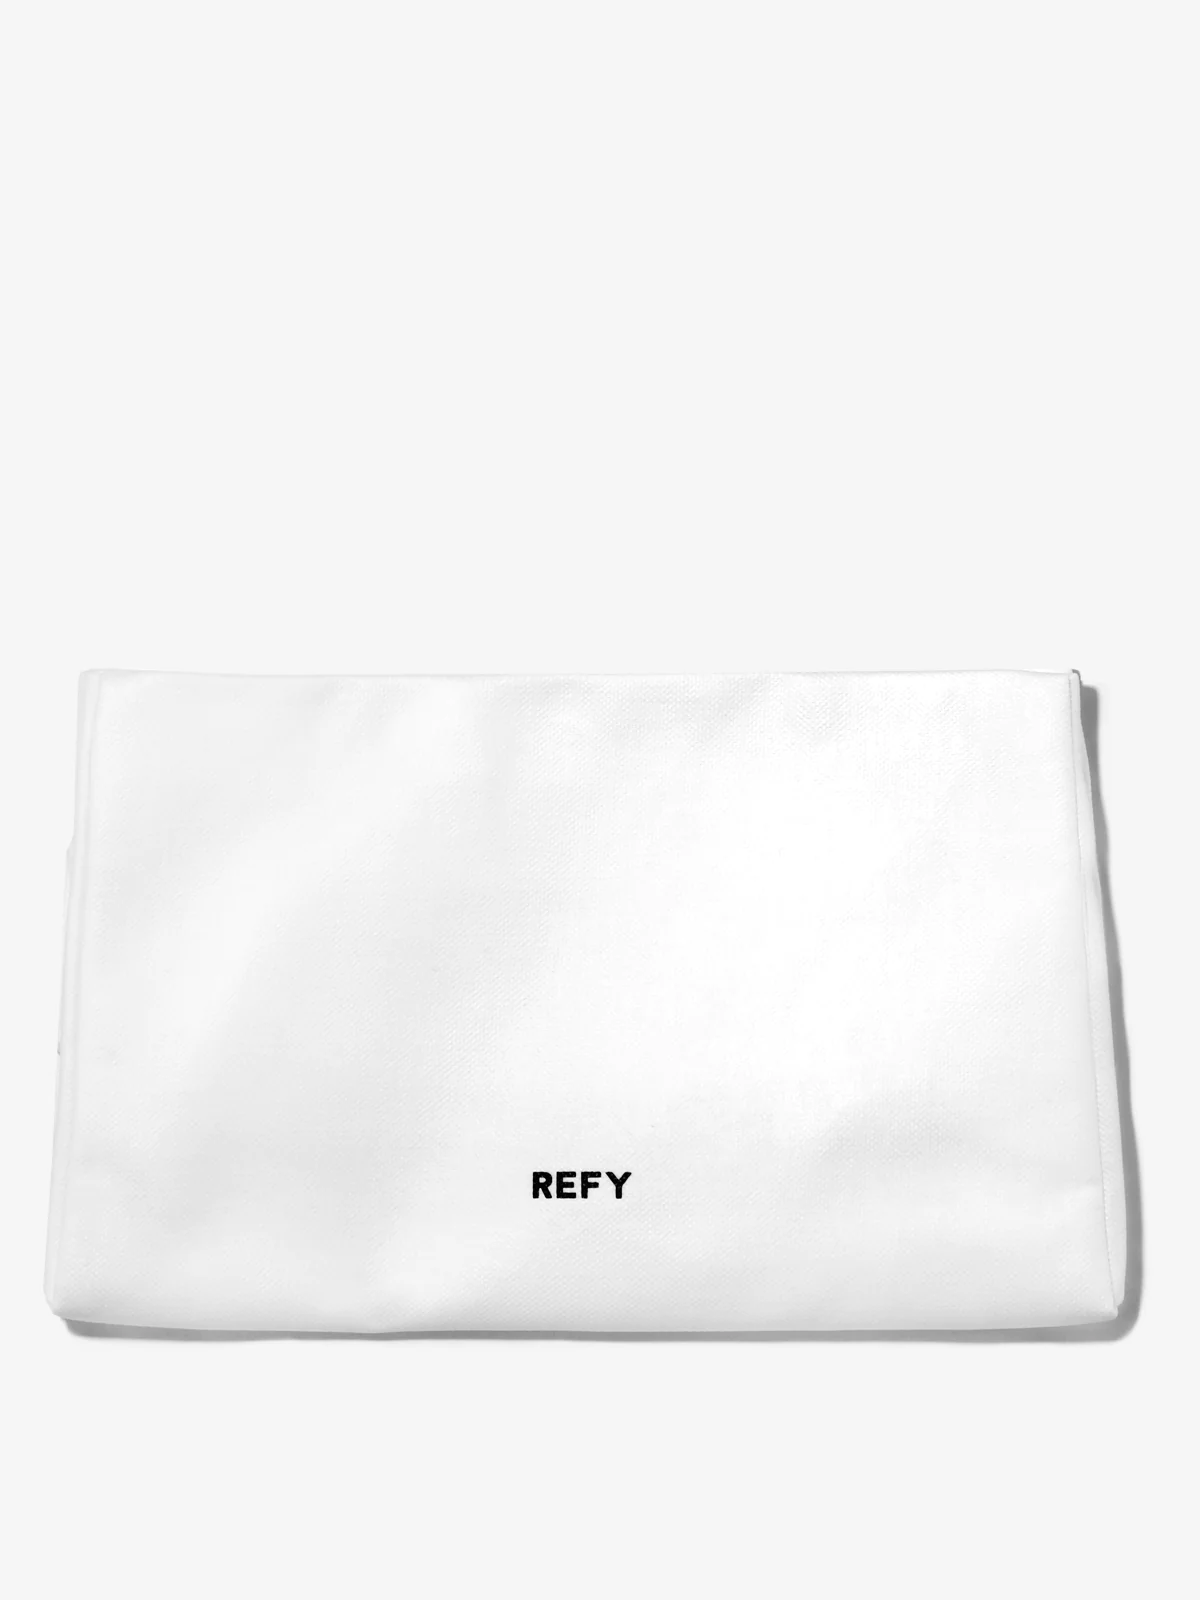 REFY SIGNATURE BAG